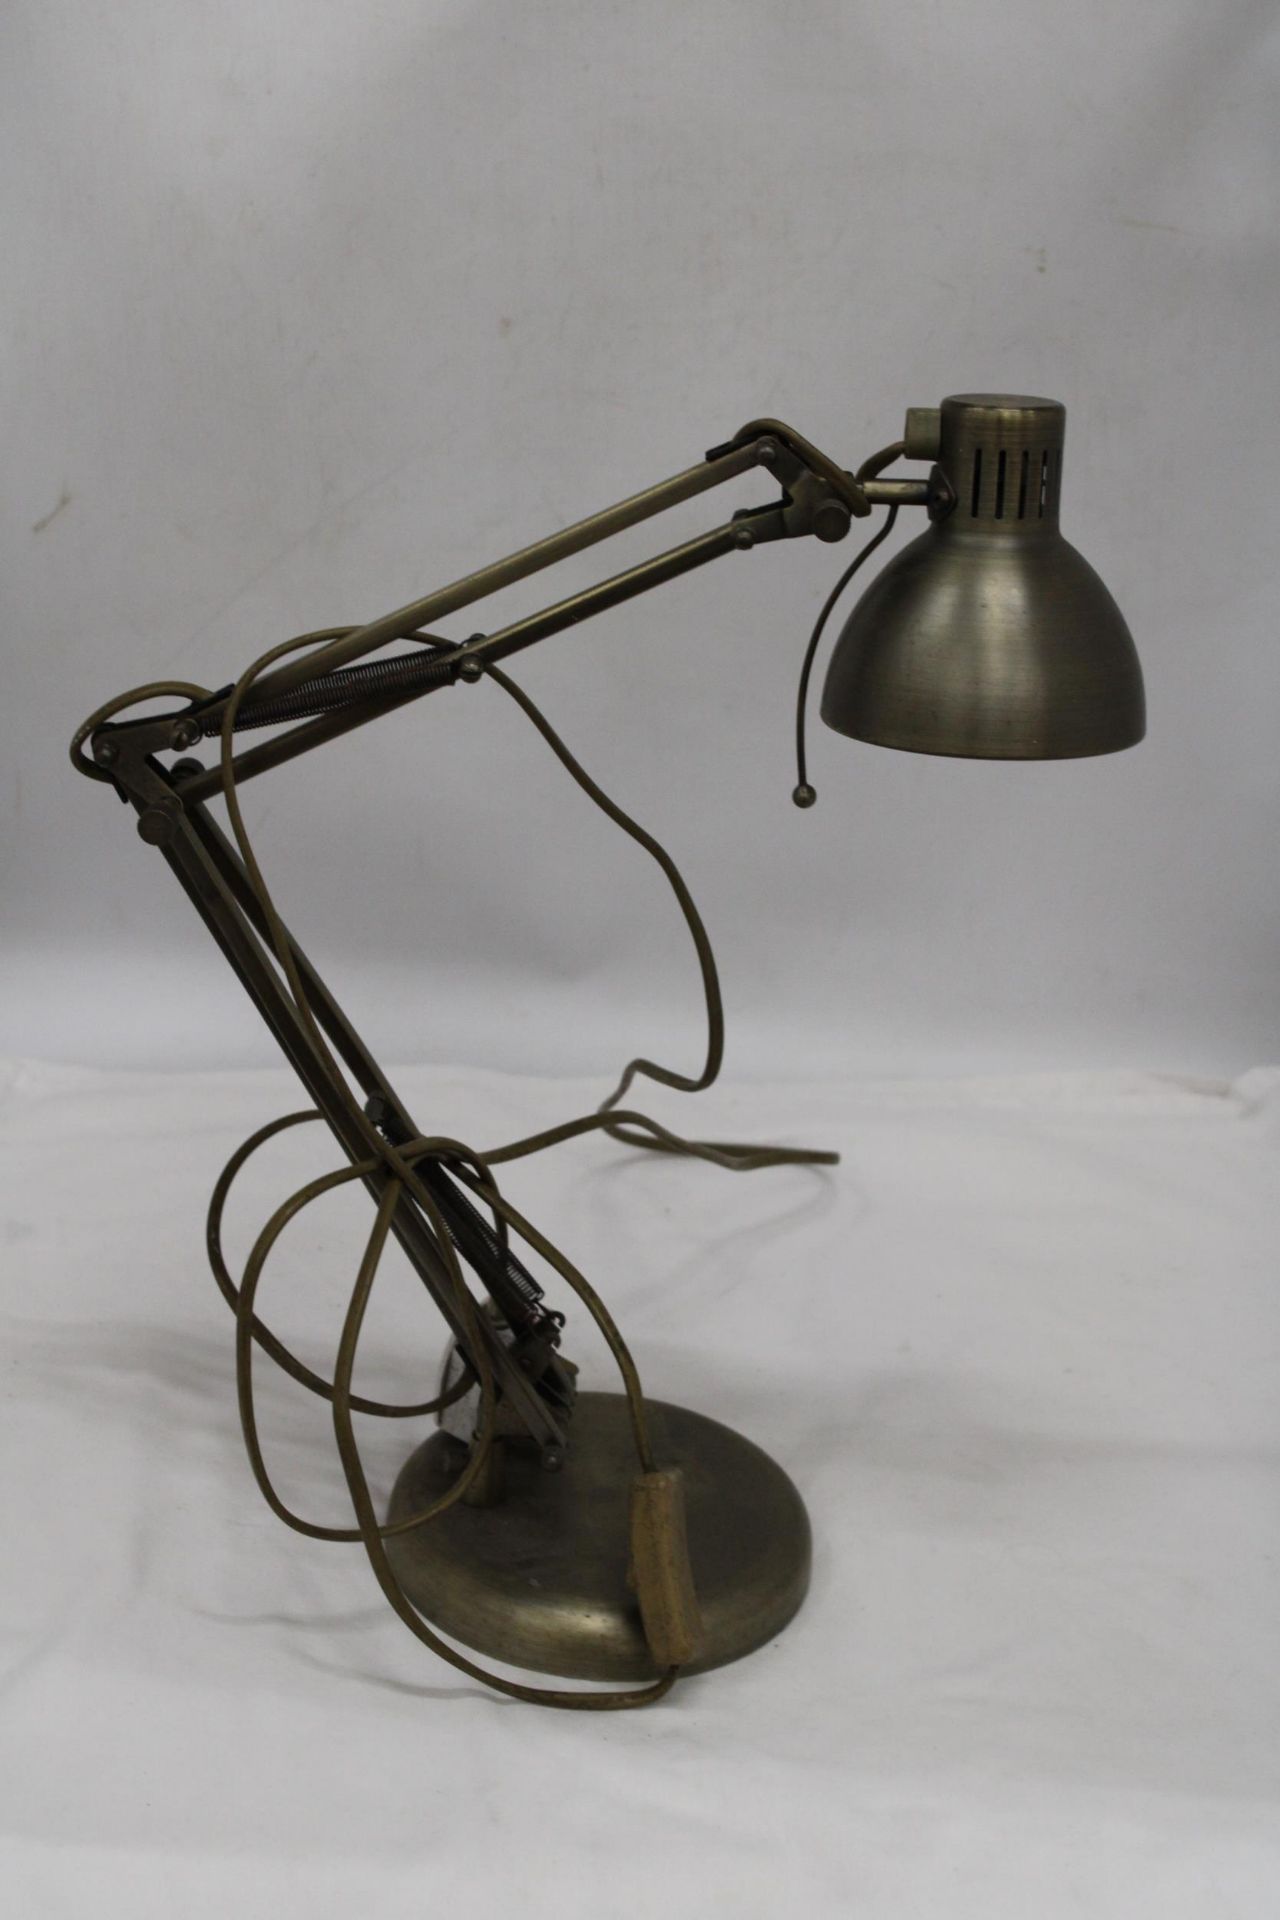 A VINTAGE METAL ANGLEPOISE LAMP